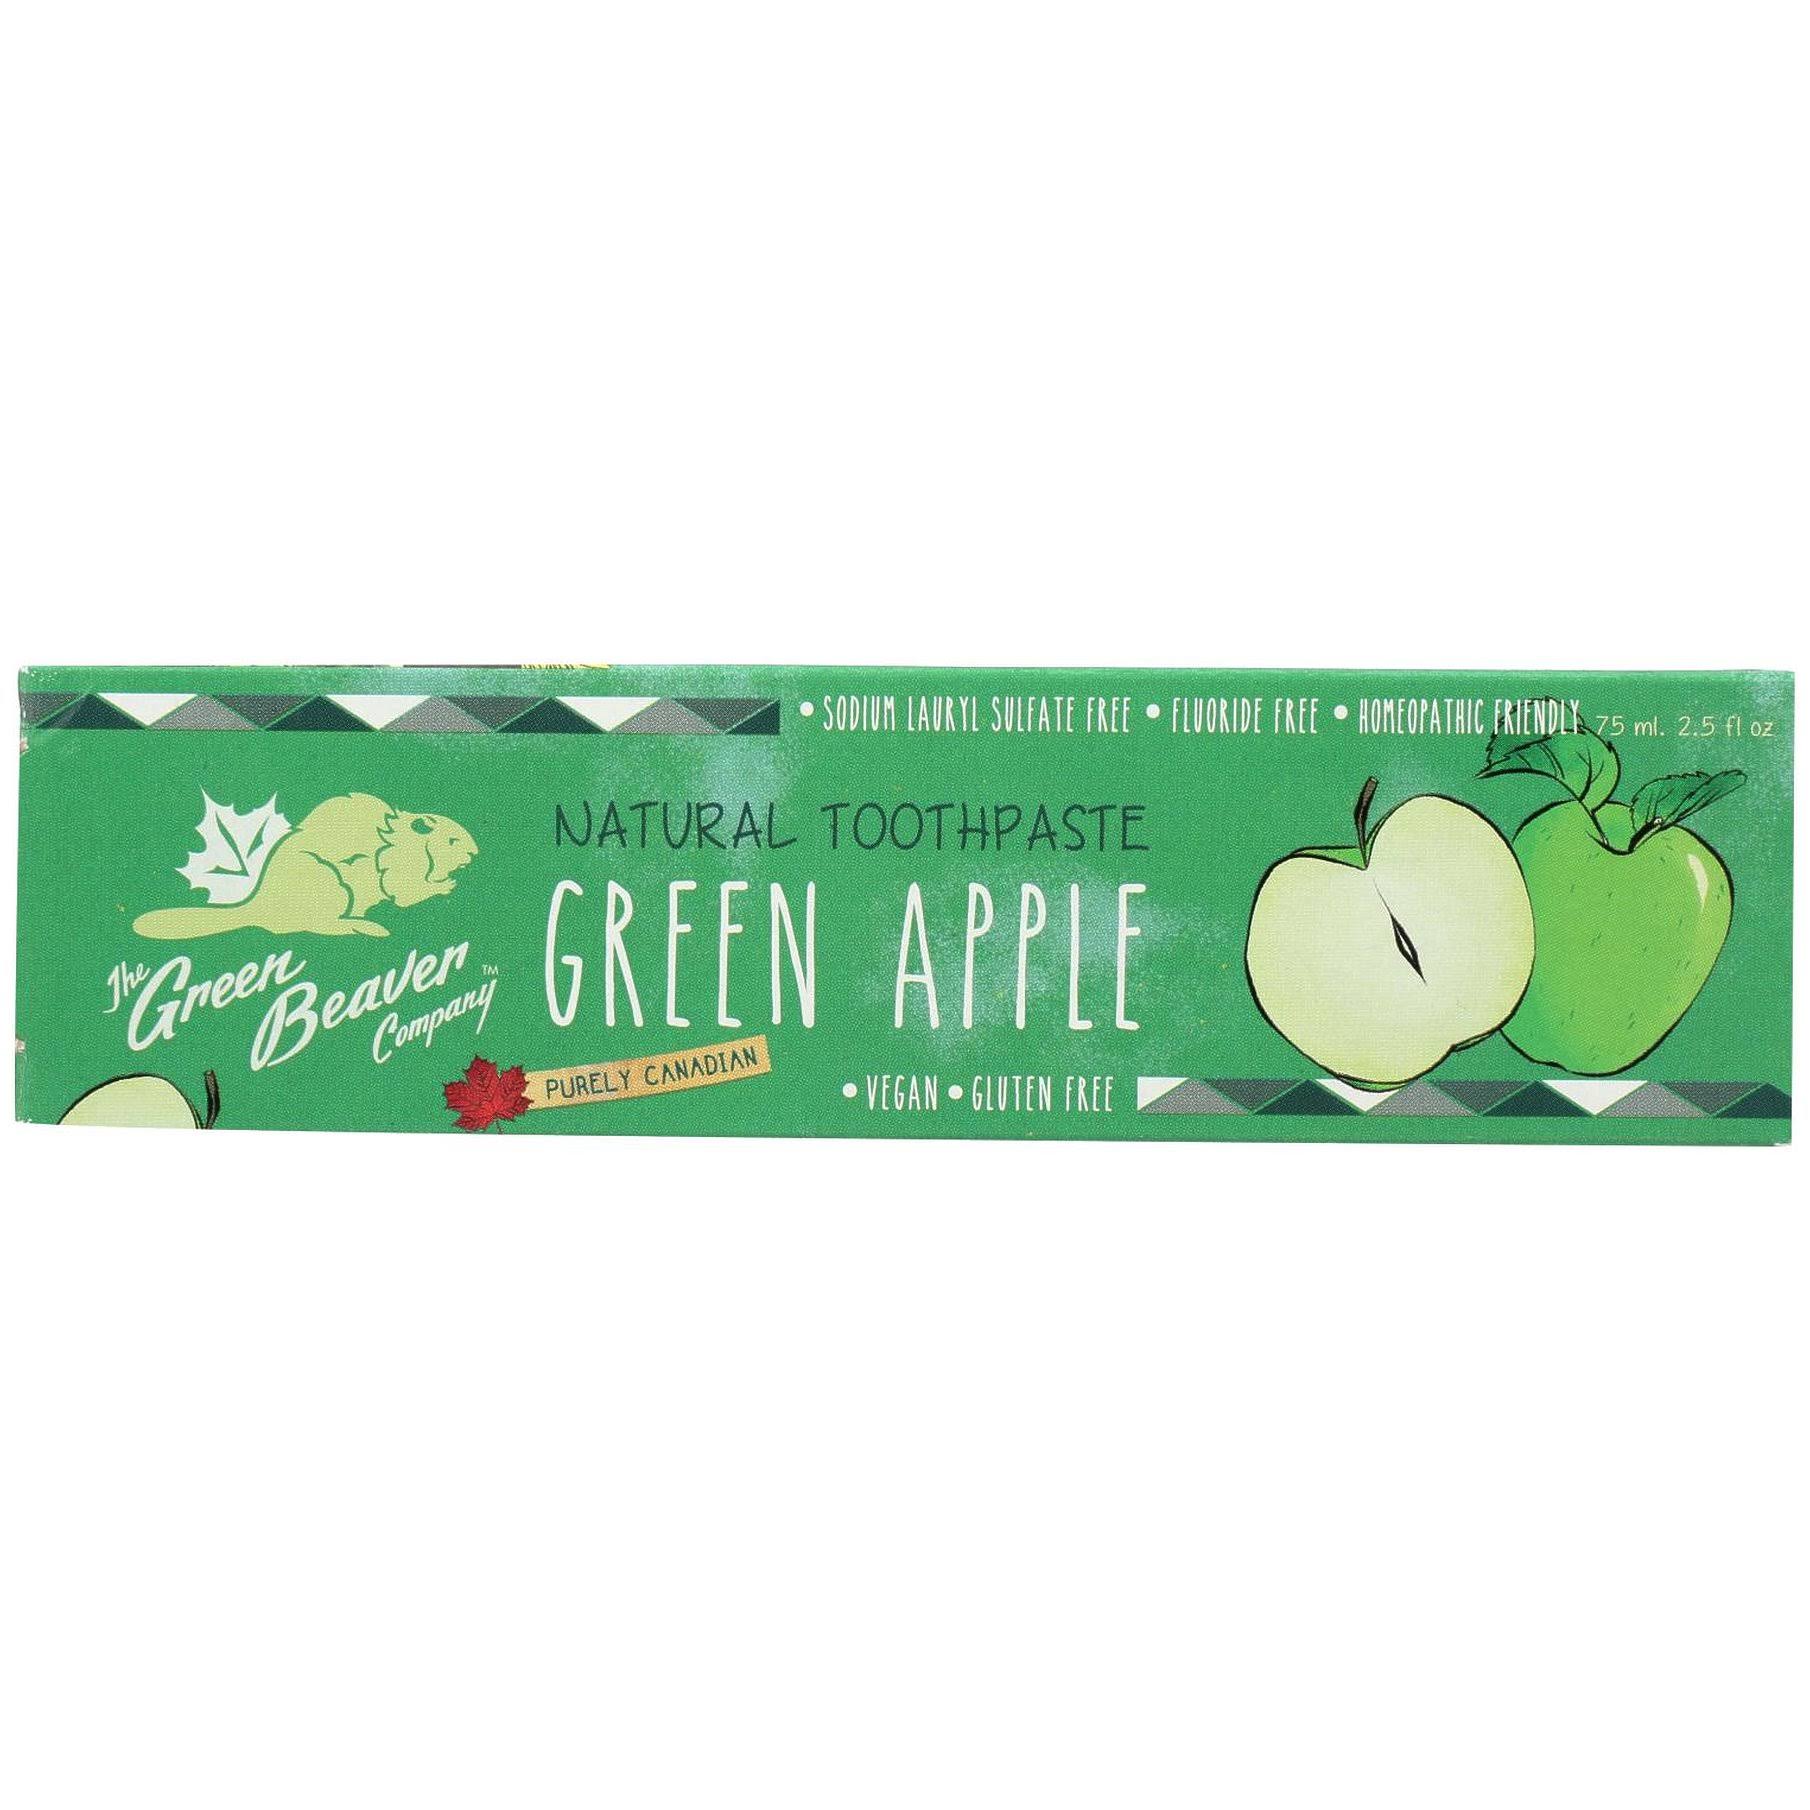 Green Beavernatural Toothpaste - Green Apple, 75ml